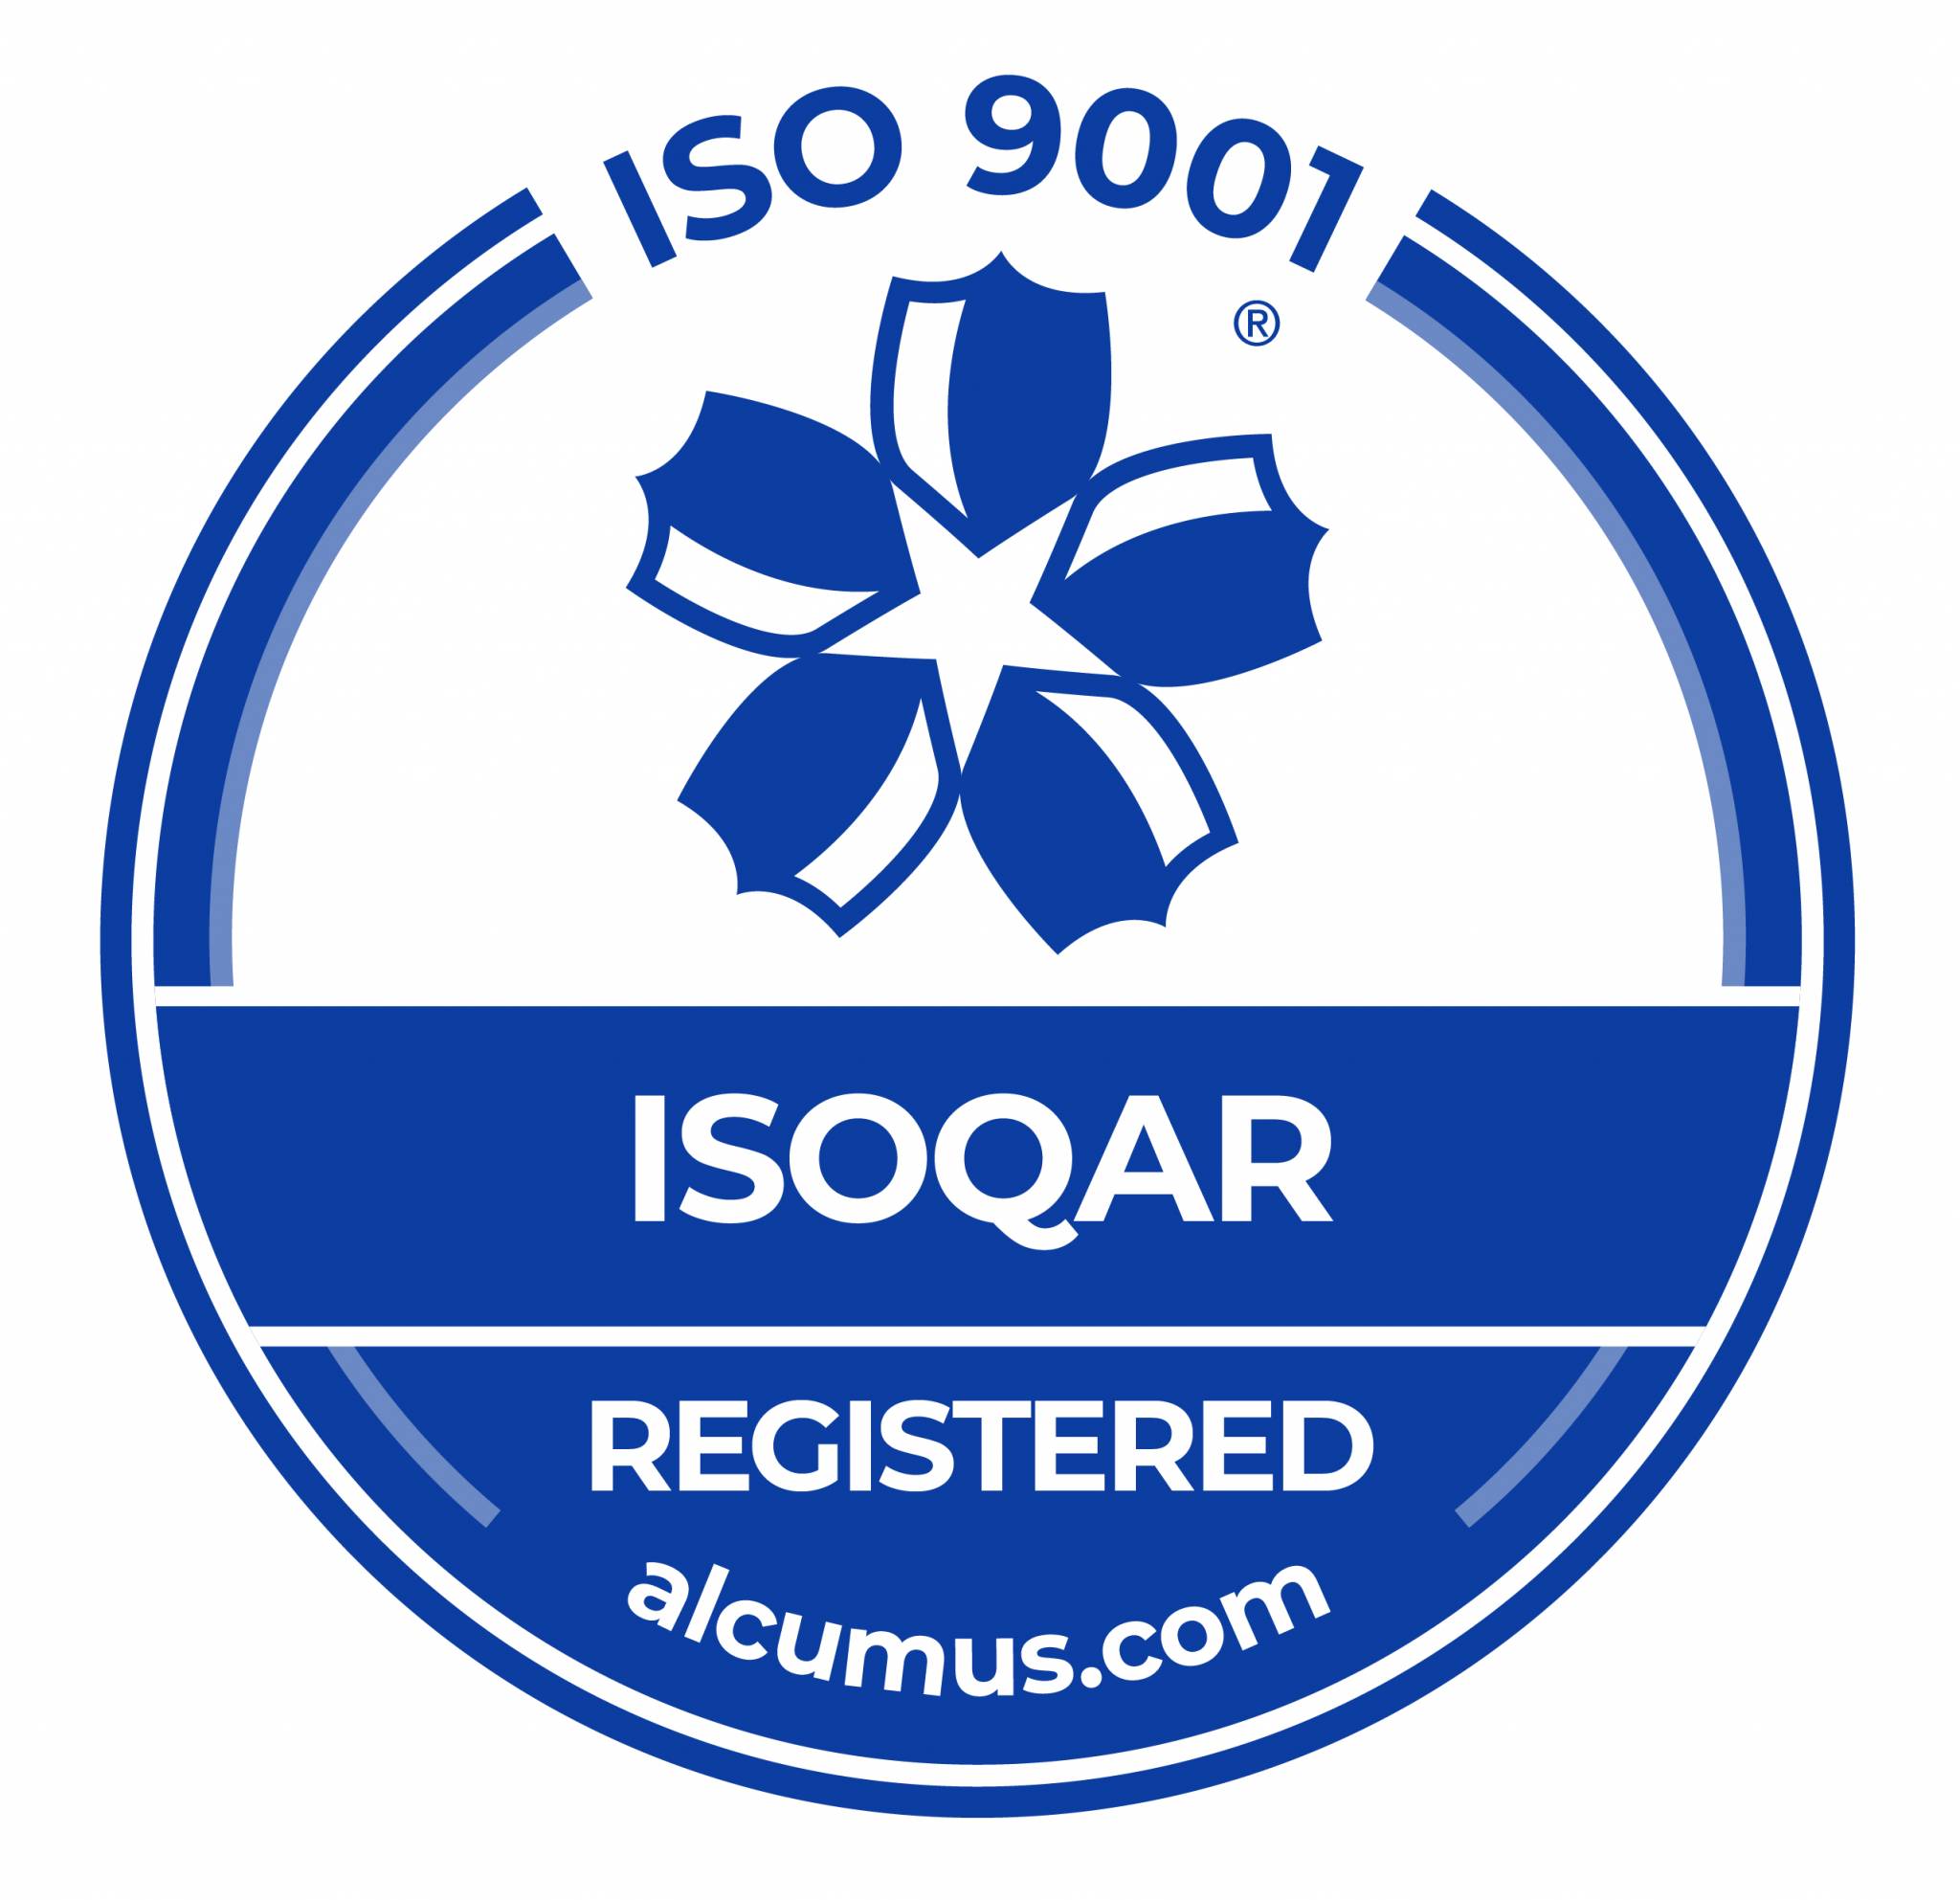 ISO9001 Quality Management Accreditation